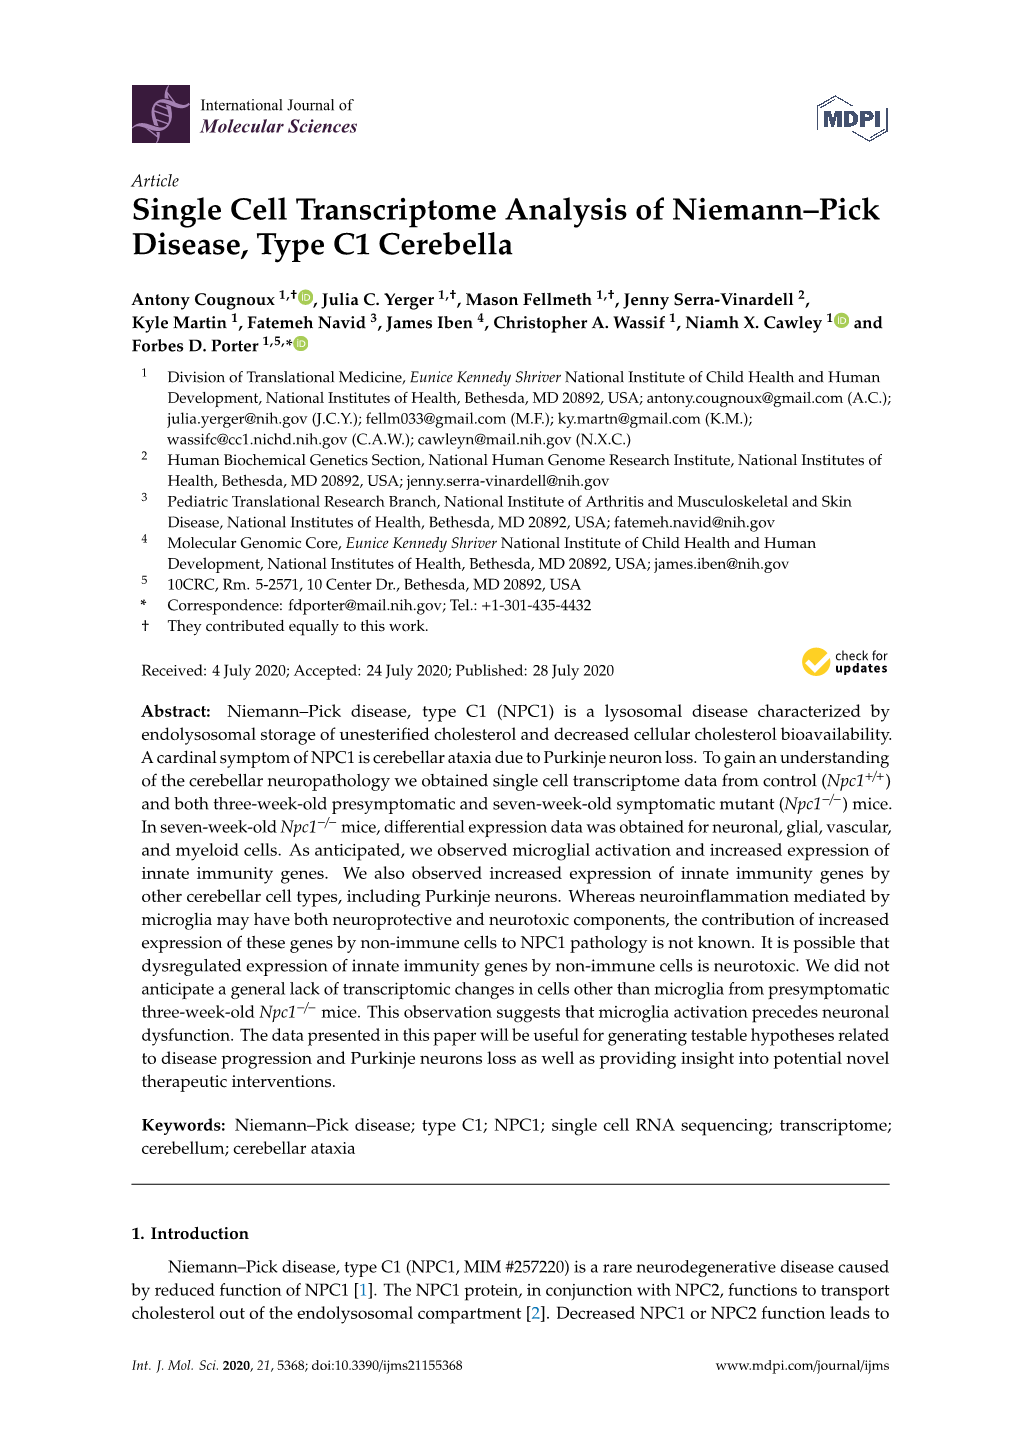 Single Cell Transcriptome Analysis of Niemann–Pick Disease, Type C1 Cerebella